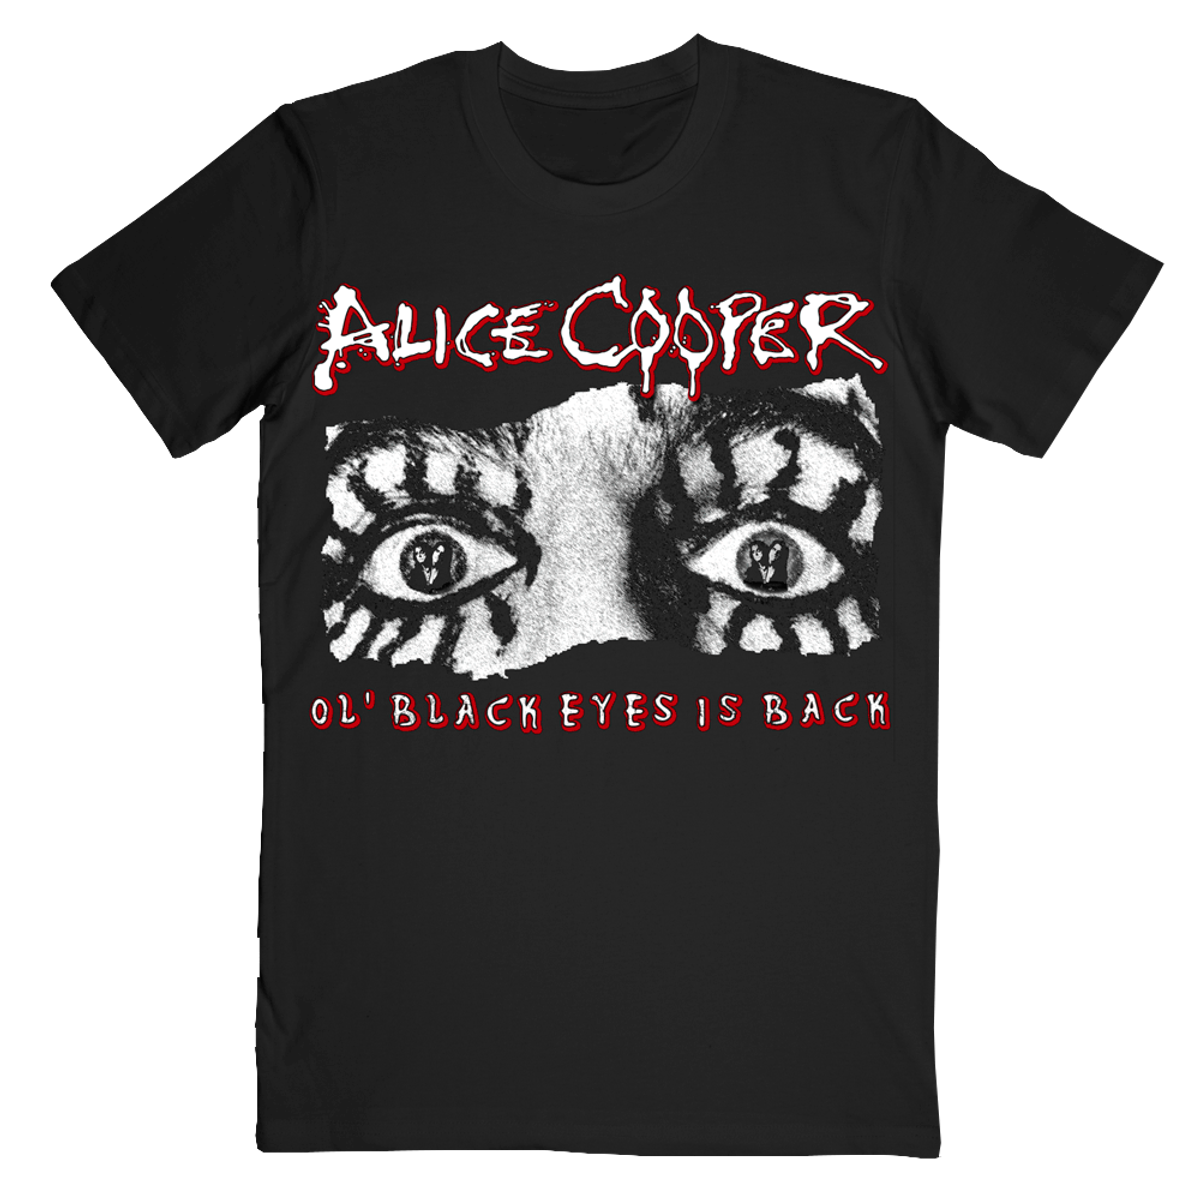 Alice Cooper reparte niños muertos - Página 19 Ol-black-eyes-is-back-tee?u=aHR0cHM6Ly9tdXNpY2dsdWUtdXNlci1hcHAtcC00LXAuczMuYW1hem9uYXdzLmNvbS9vcmlnaW5hbHMvMzQ5YThkMTctNjI0Ny00ZDA3LWI2NzktN2RlZGNmNzVjMmI5&width=1200&mode=contain